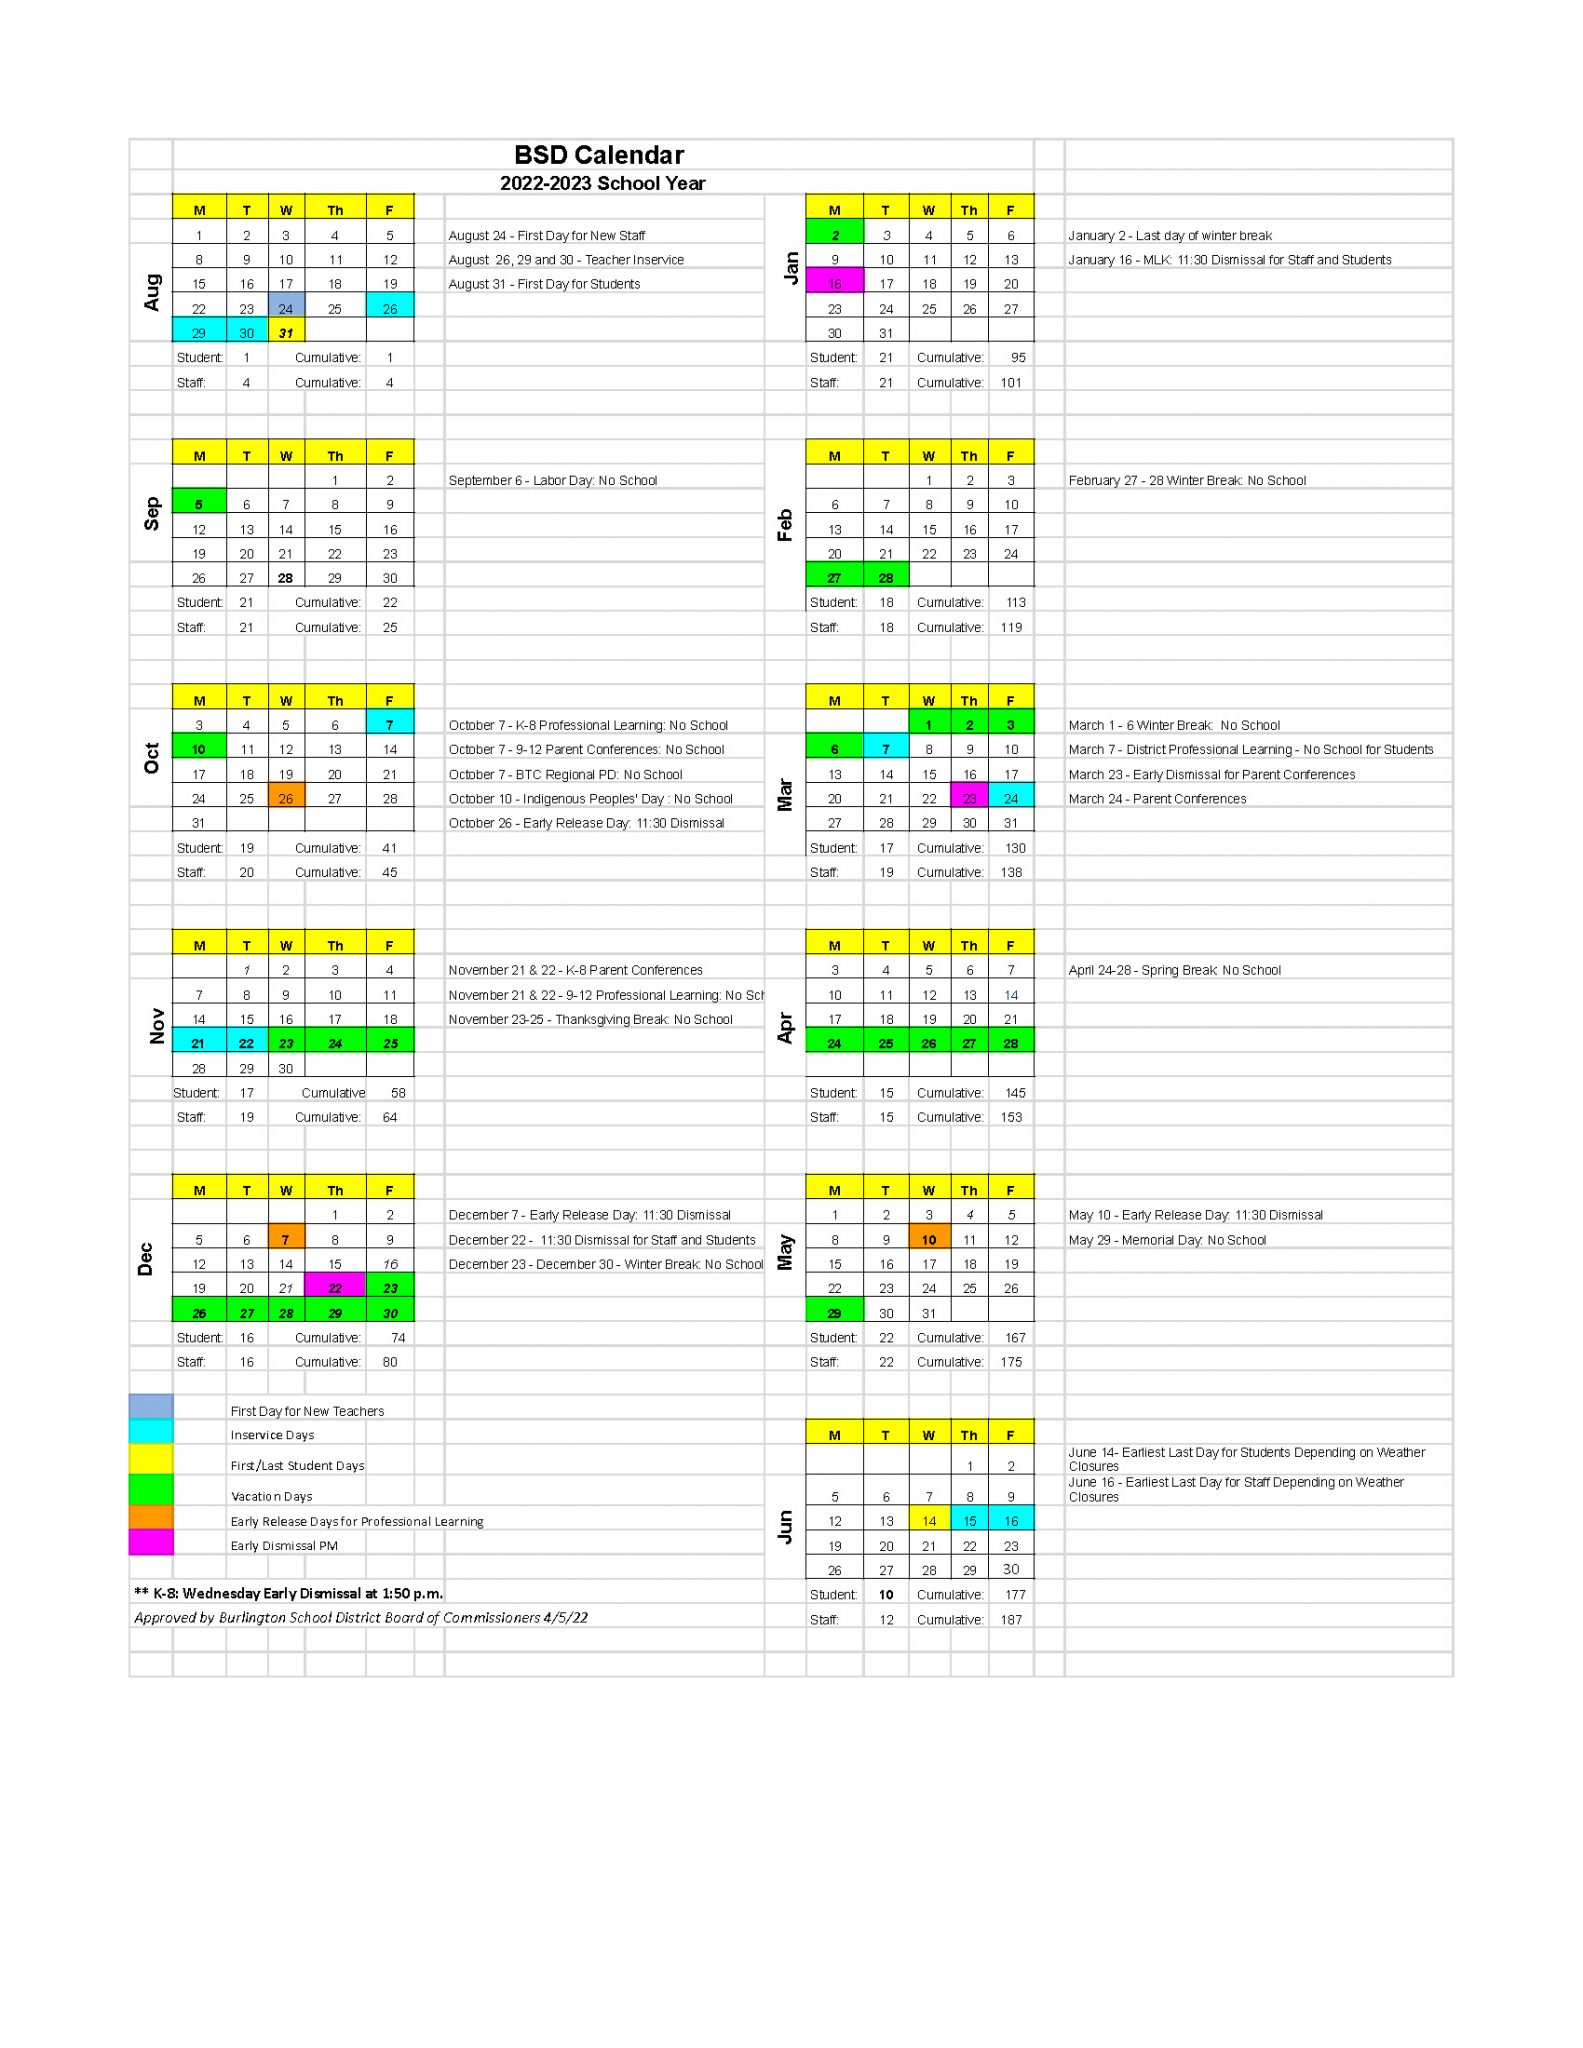 BSD Releases 2022/2023 School Calendar